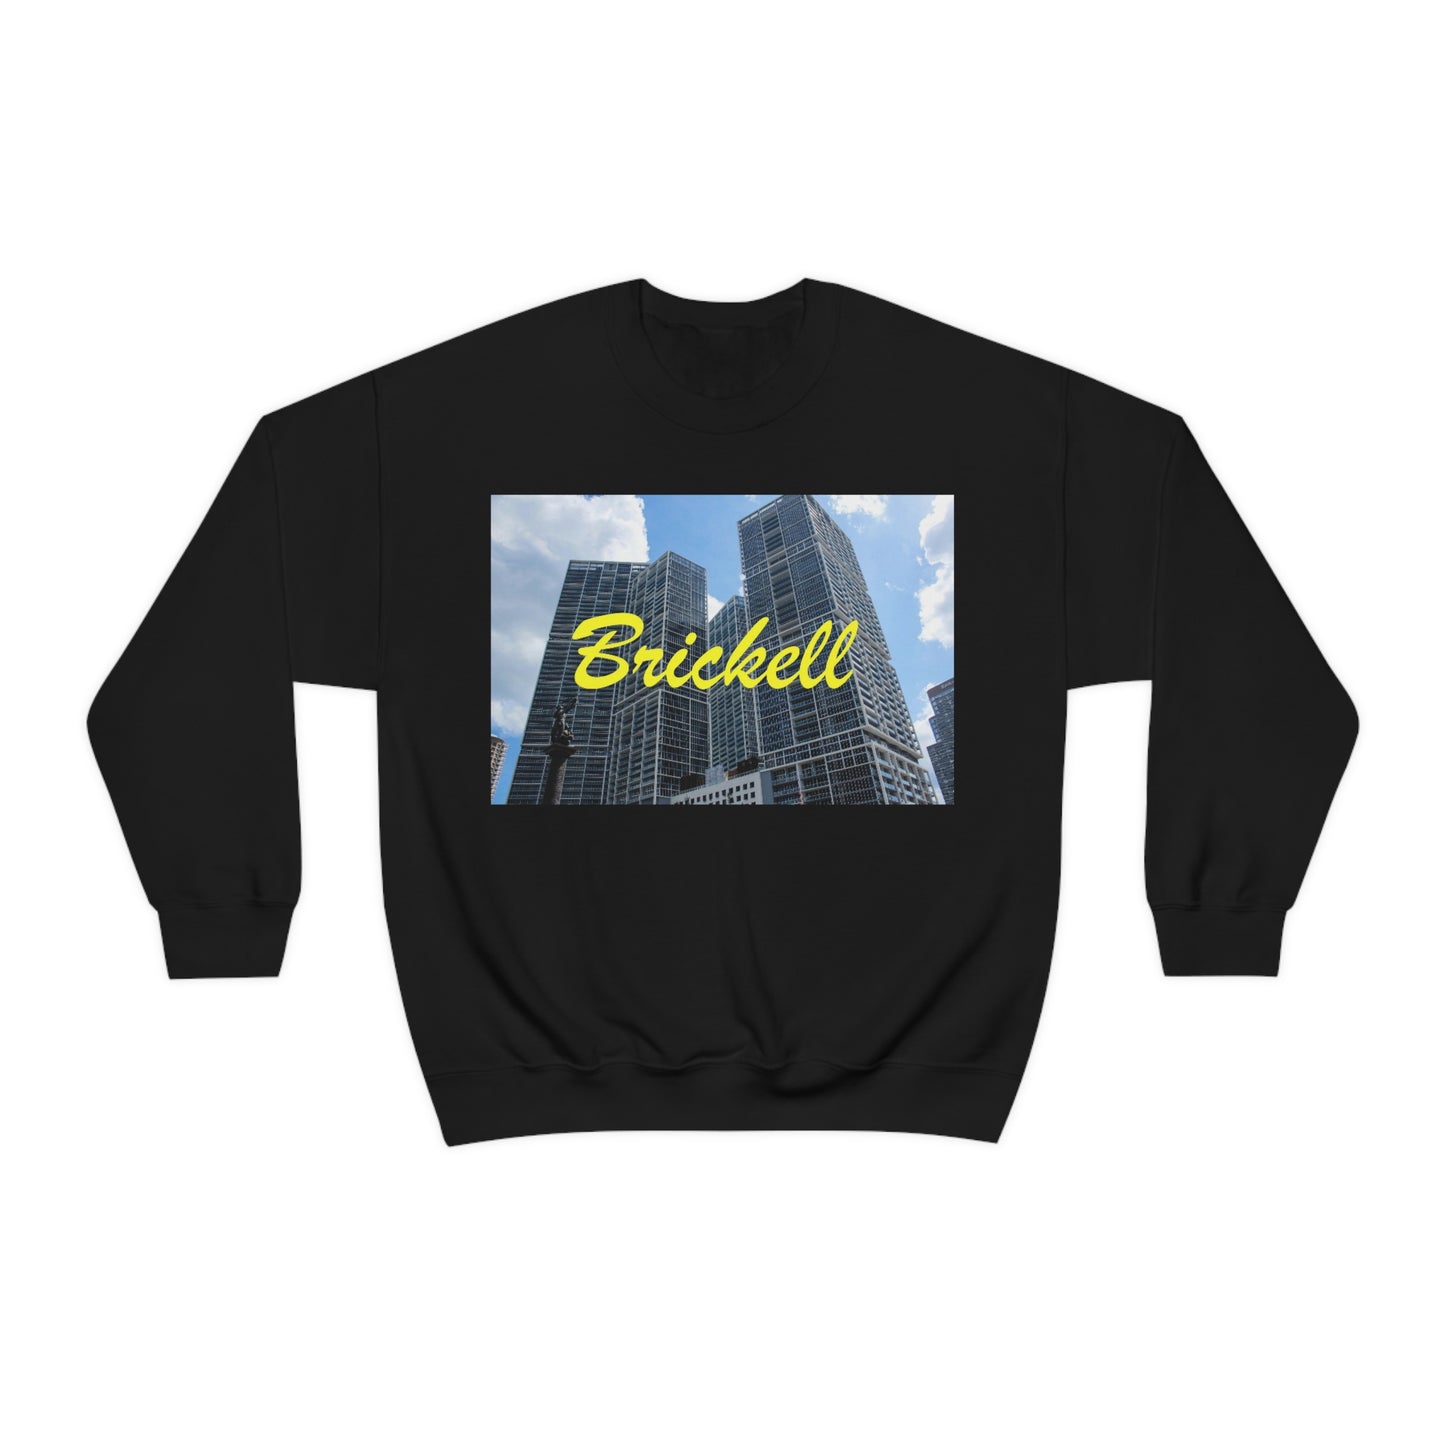 Brickell Sweatshirt